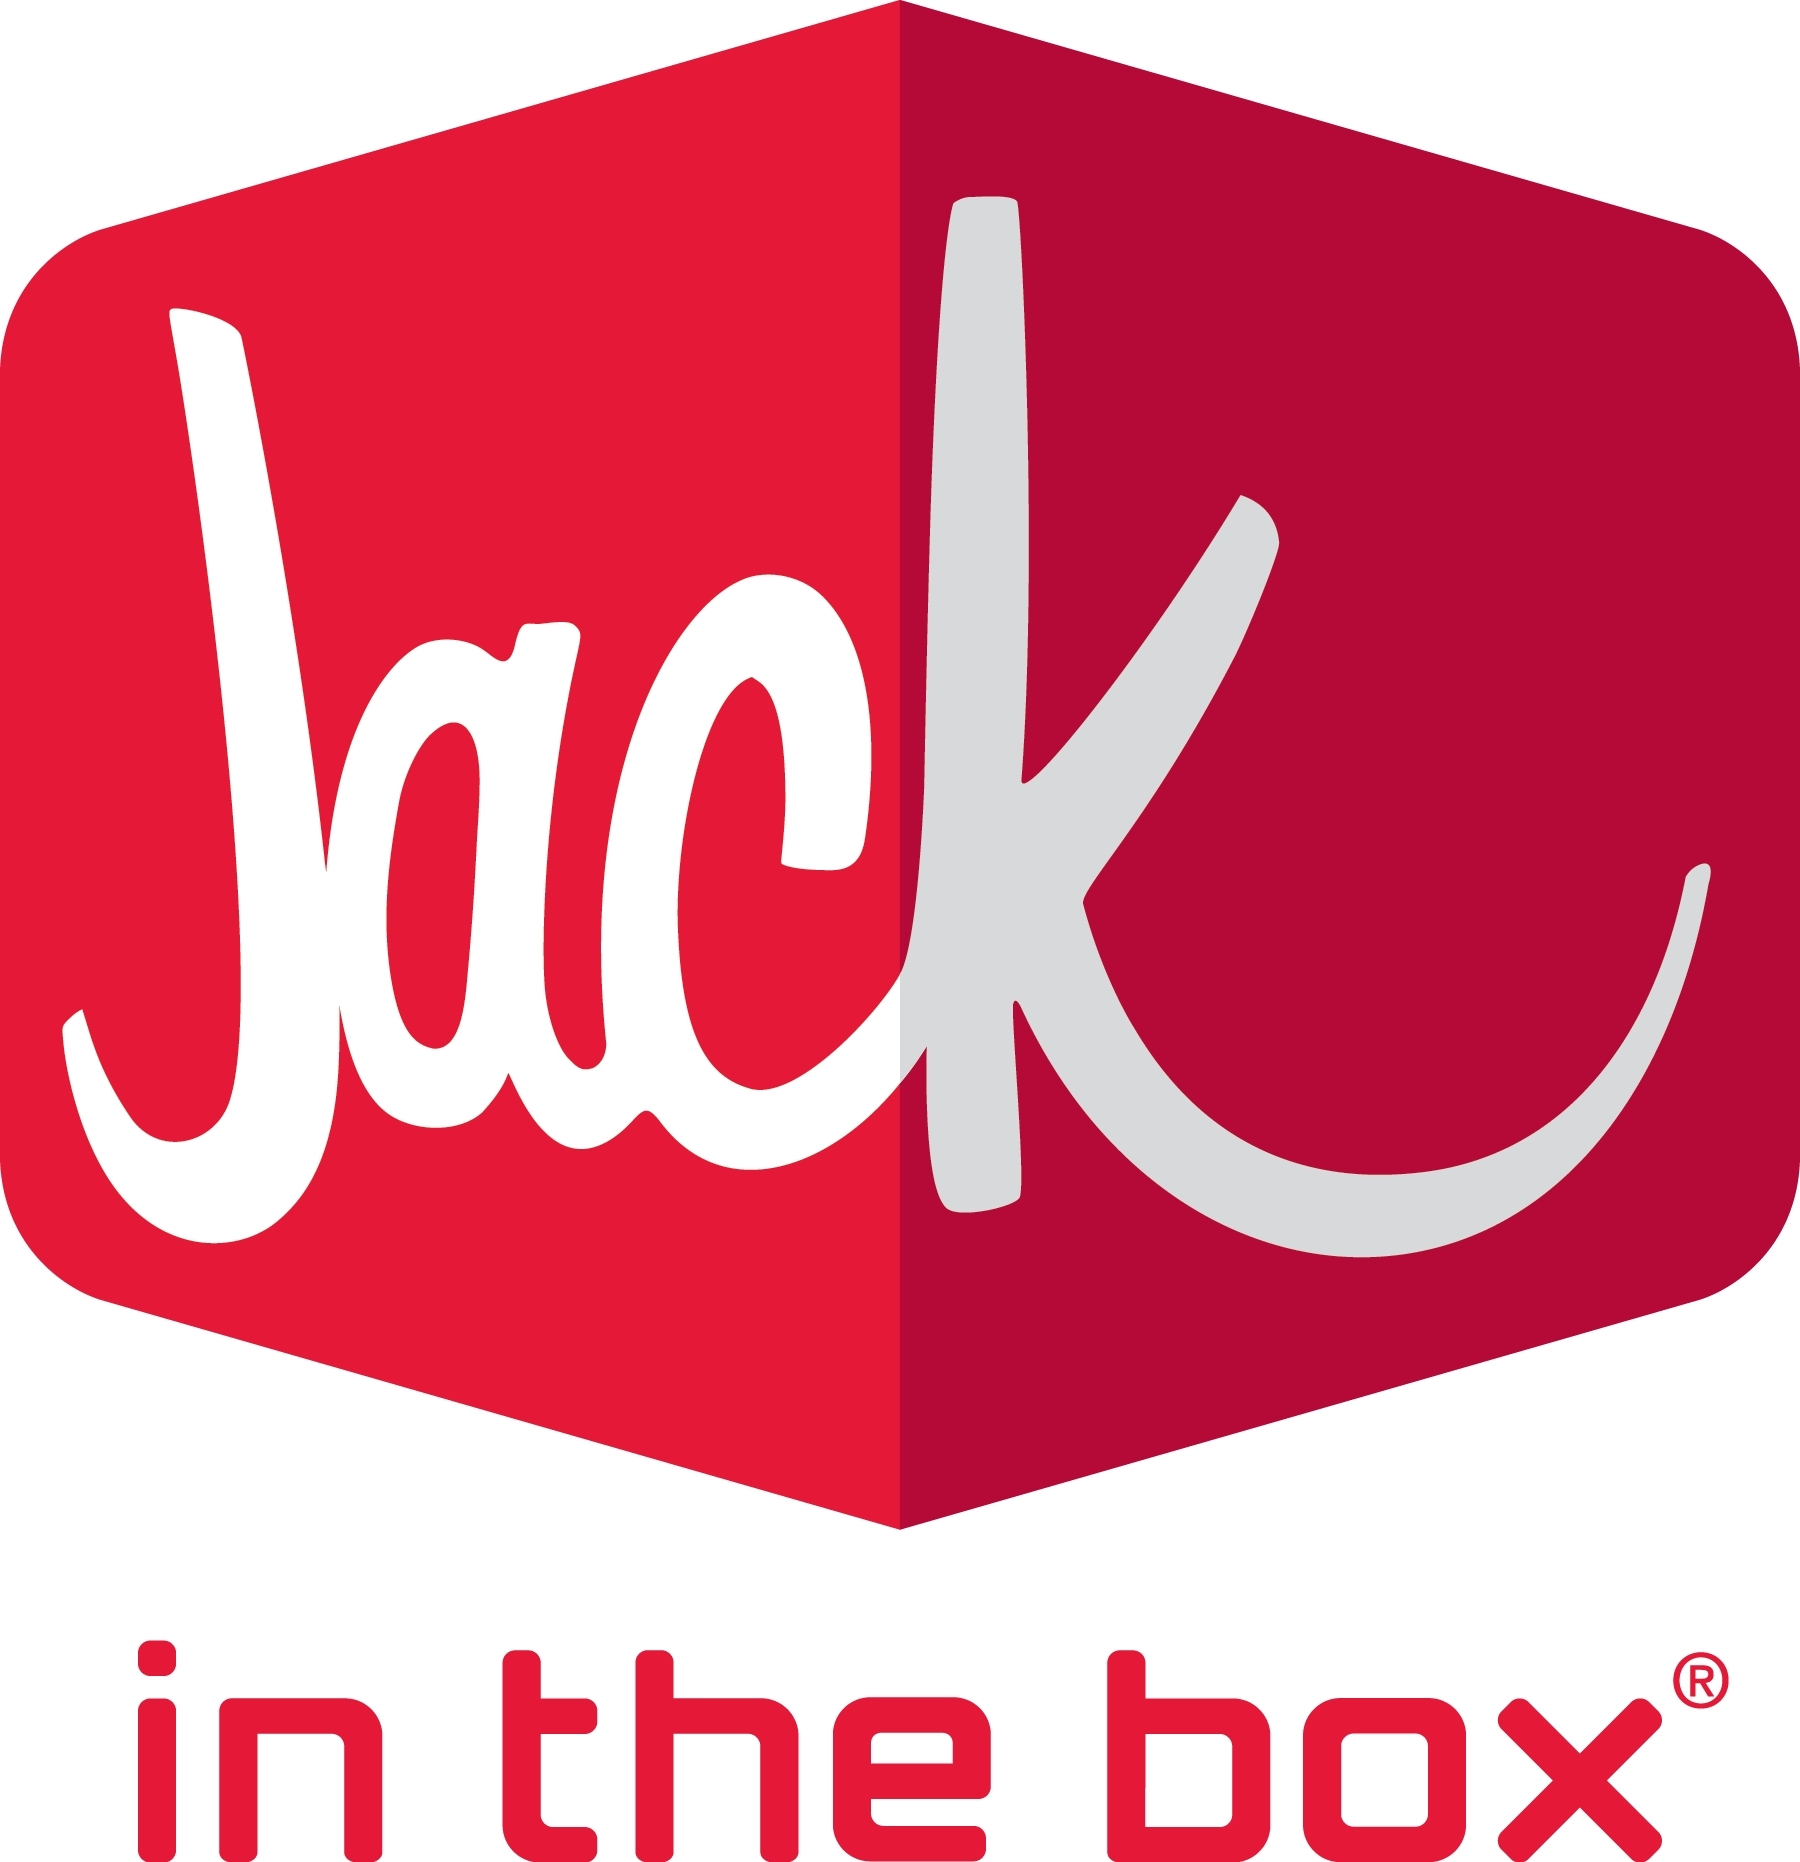 https://mms.businesswire.com/media/20200729005173/en/808770/5/Jack_in_the_Box_Primary_Logo.jpg 